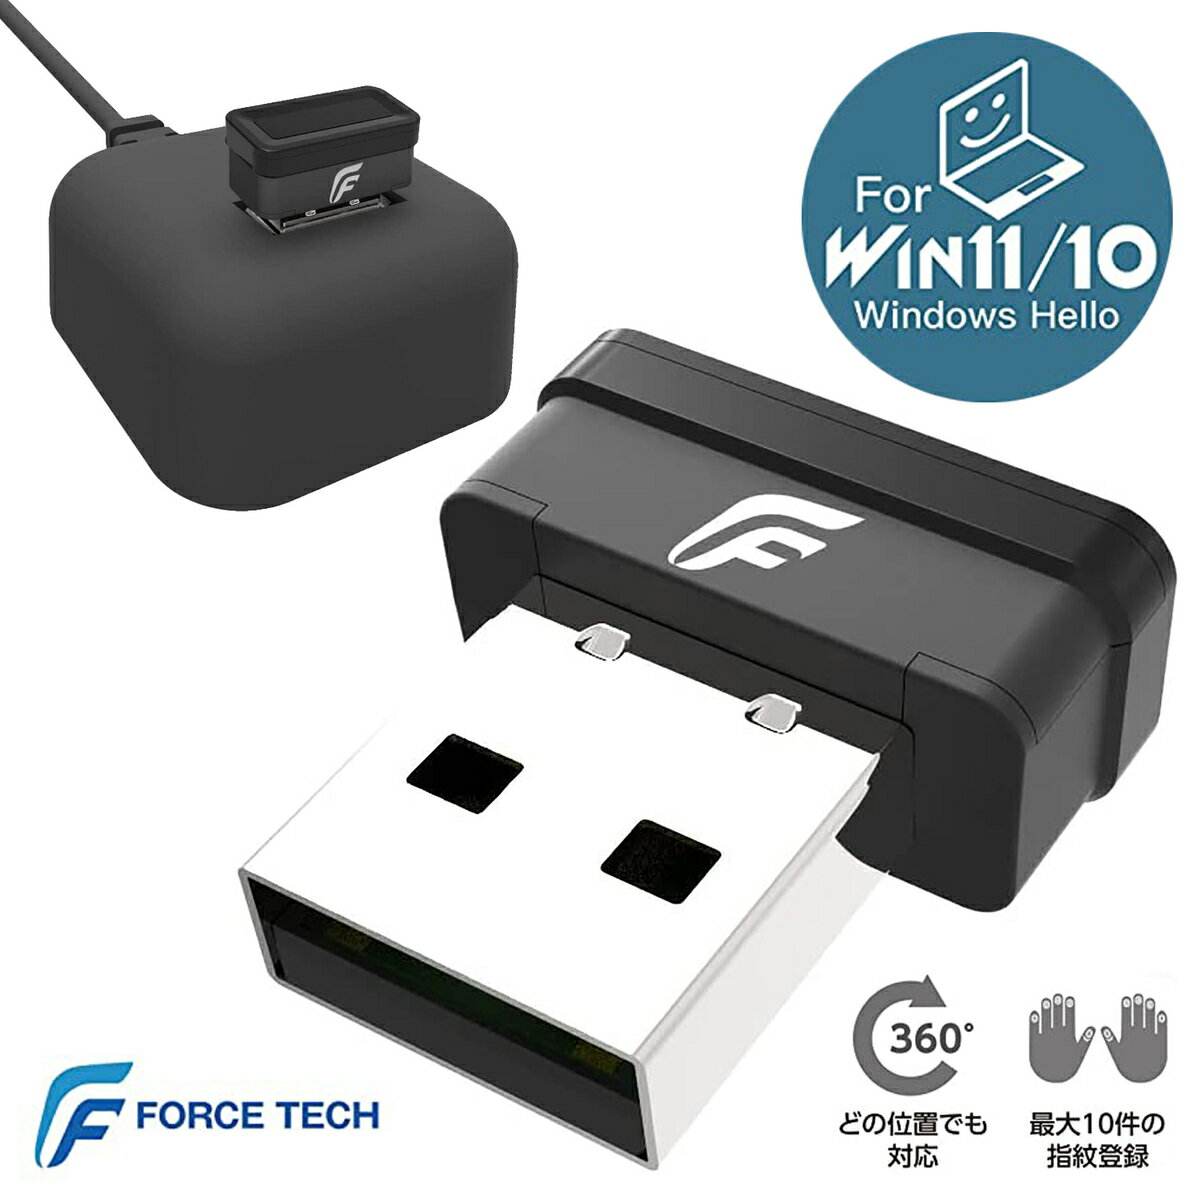 FORCE TECH USB指紋認証キー USBスタンド付 Windows Hello 対応 360° 指紋センサー 搭載 Windows11 Windows10 ウインドウズハロー 静電容量方式 高速 指紋登録10件 国内サポート USBドングル ブラック フォーステック FTC-FPUSB2 (C)